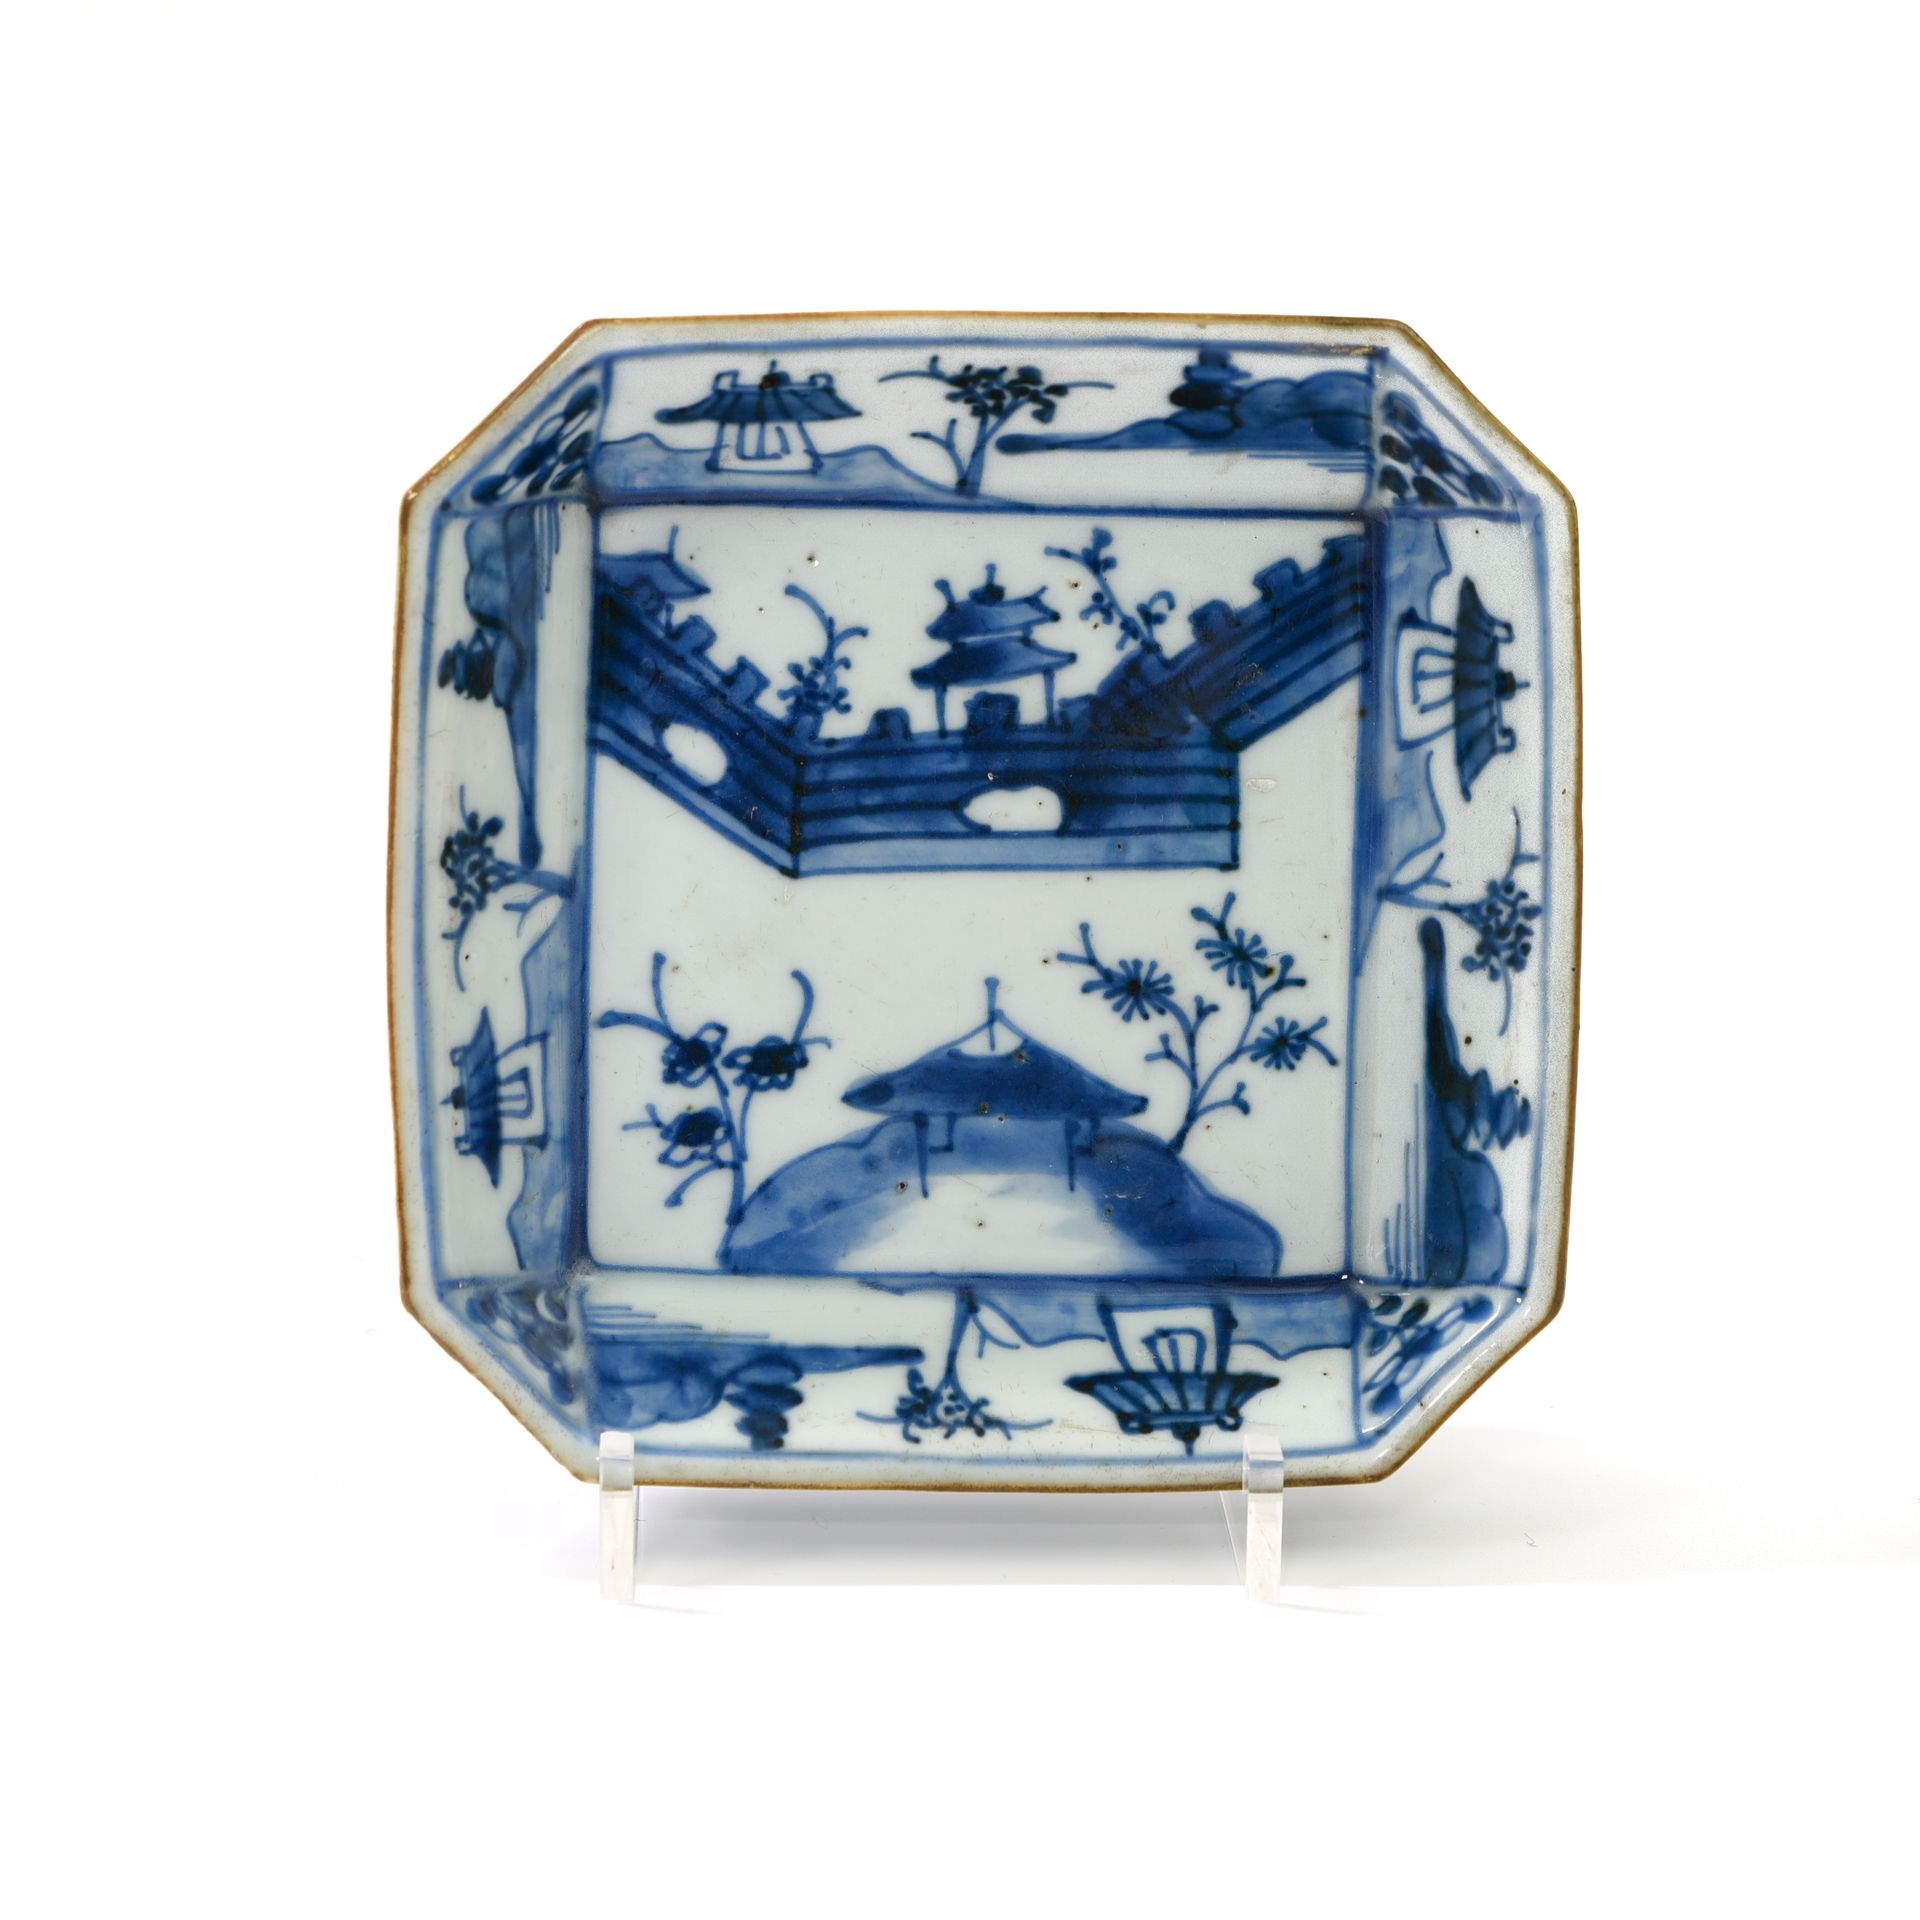 Null 中国，印度公司--乾隆时期（1736-1795）。

小托盘



方形瓷盘，有切角，釉下青花装饰，中间有亭子和墙，两翼装饰有靠近银行的亭子。



&hellip;